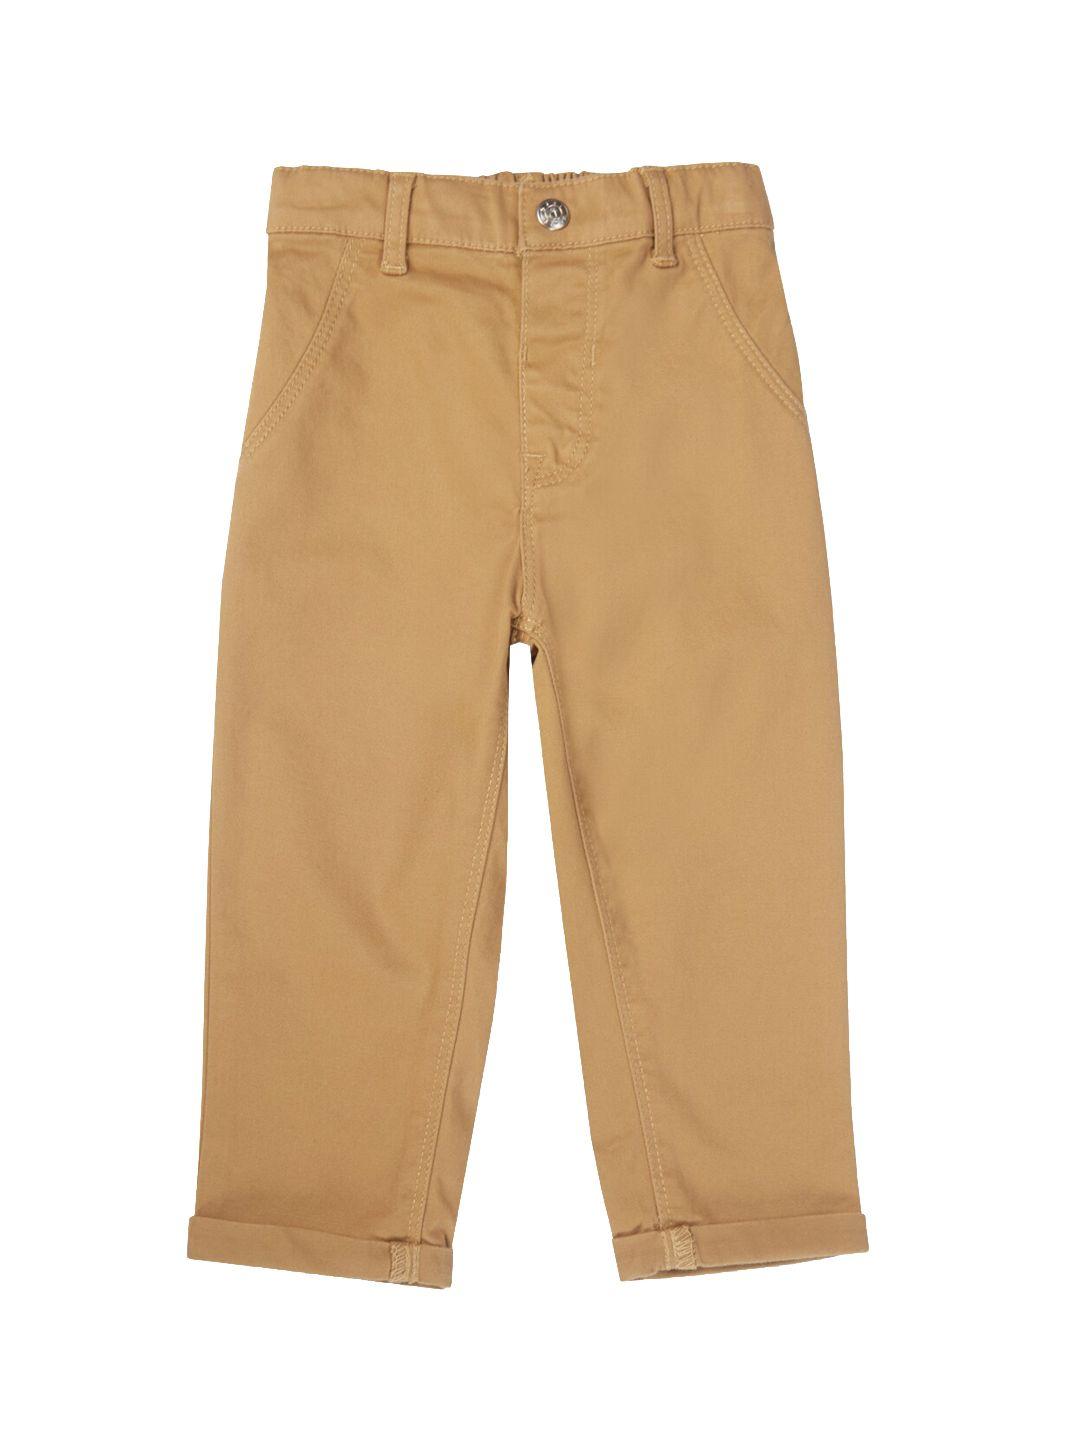 gj baby boys mid-rise cotton trousers